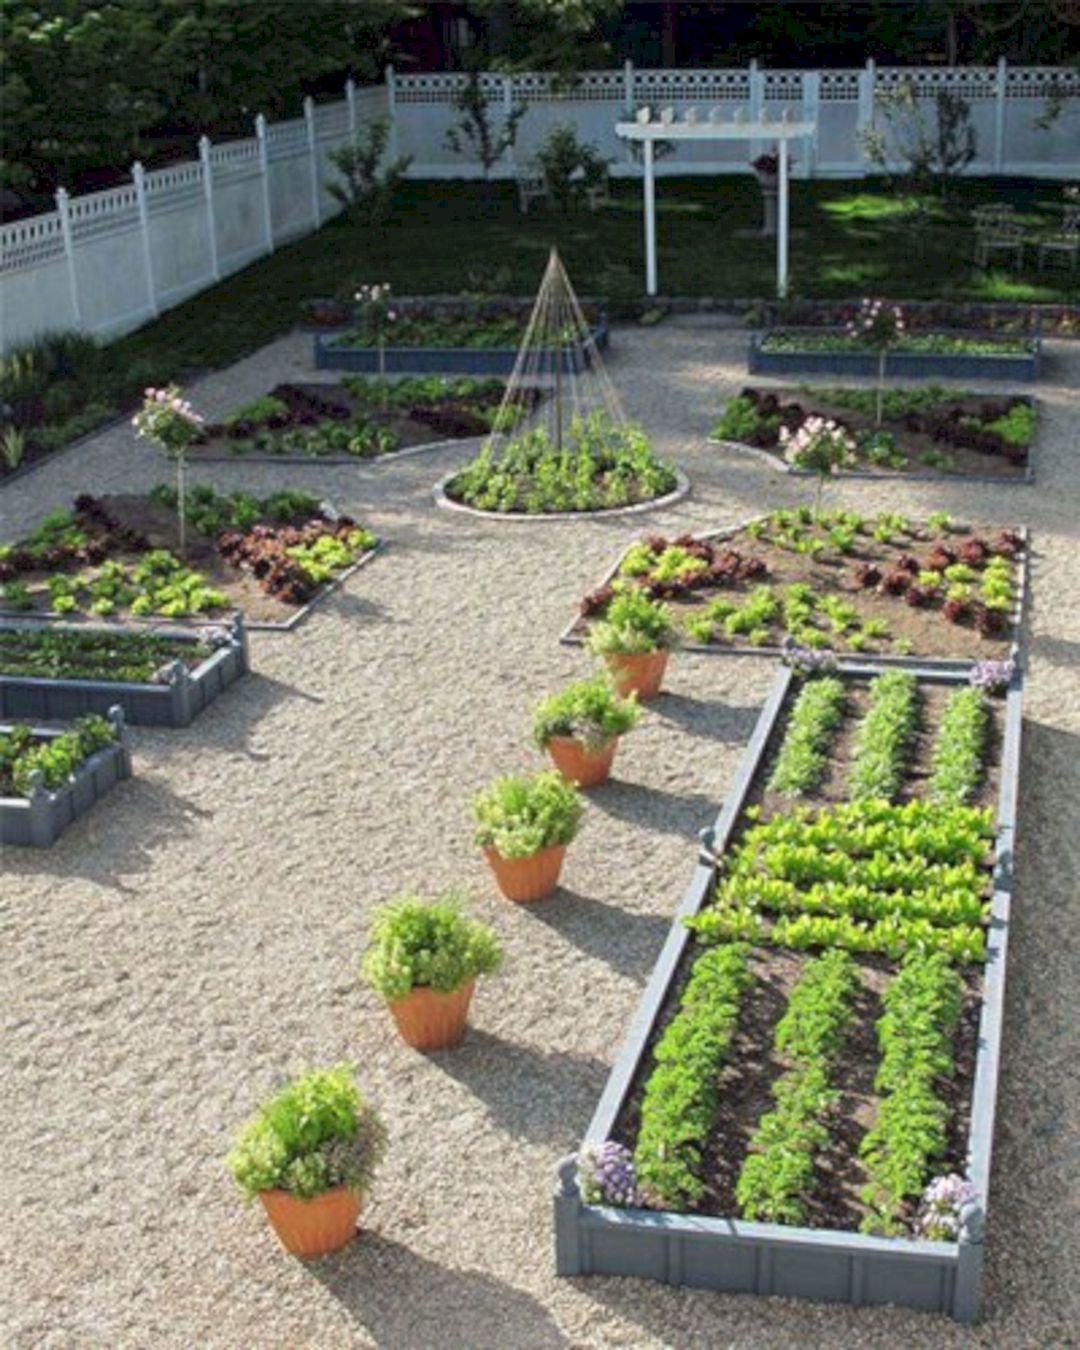 Best ideas about Backyard Vegetable Garden
. Save or Pin Backyard Ve able Garden Design Ideas – DECOREDO Now.